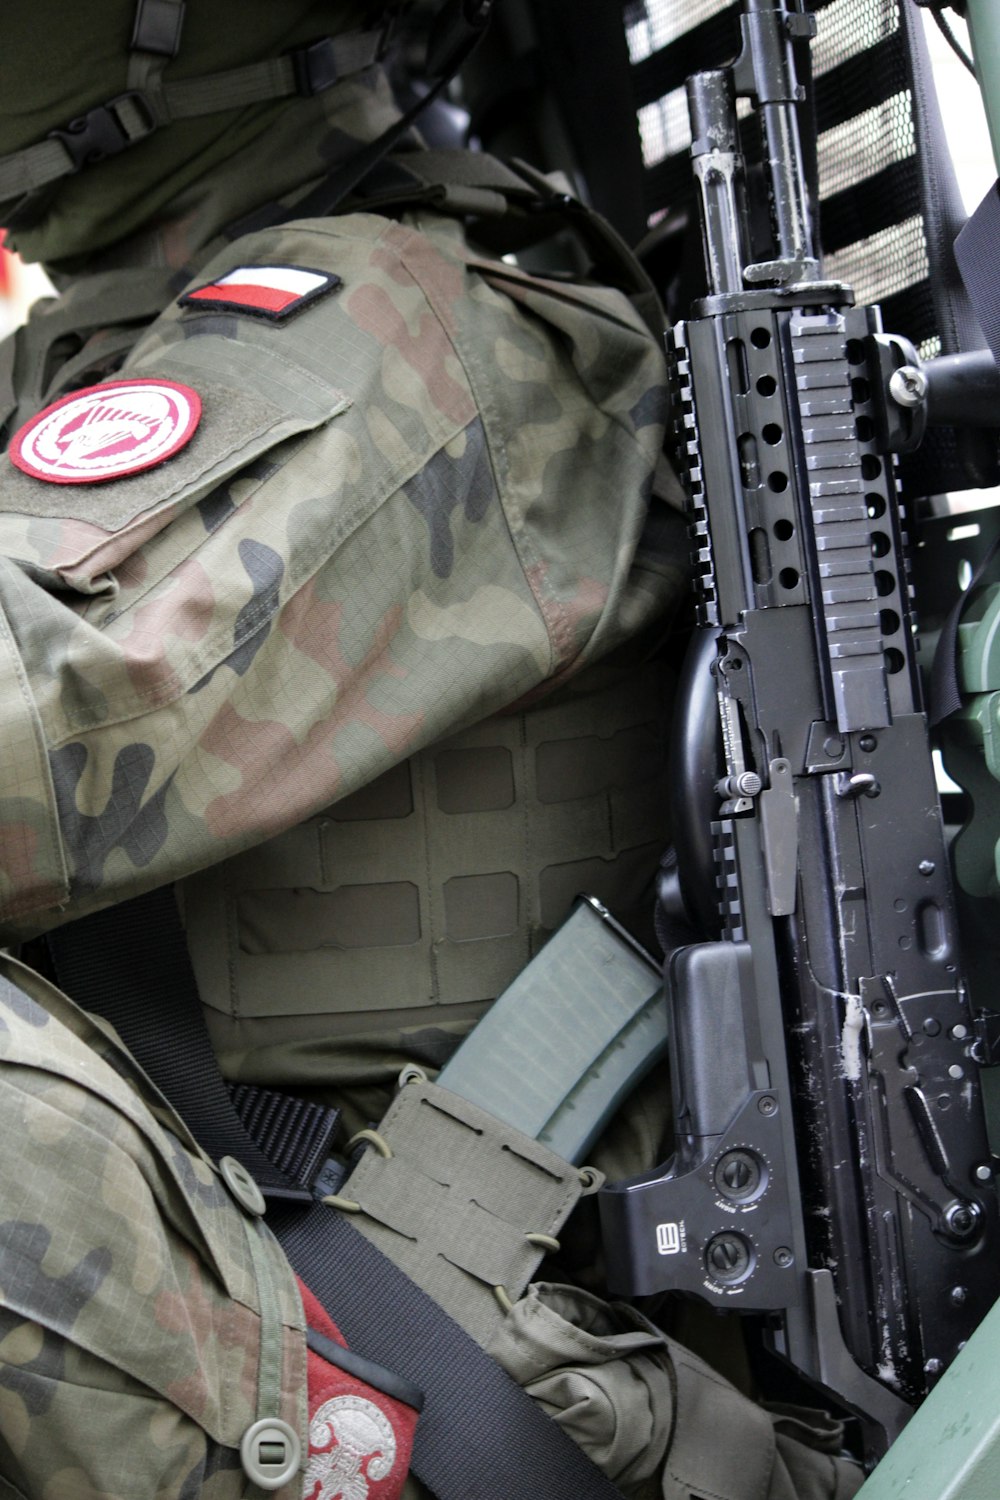 a close up of a military uniform with a machine gun